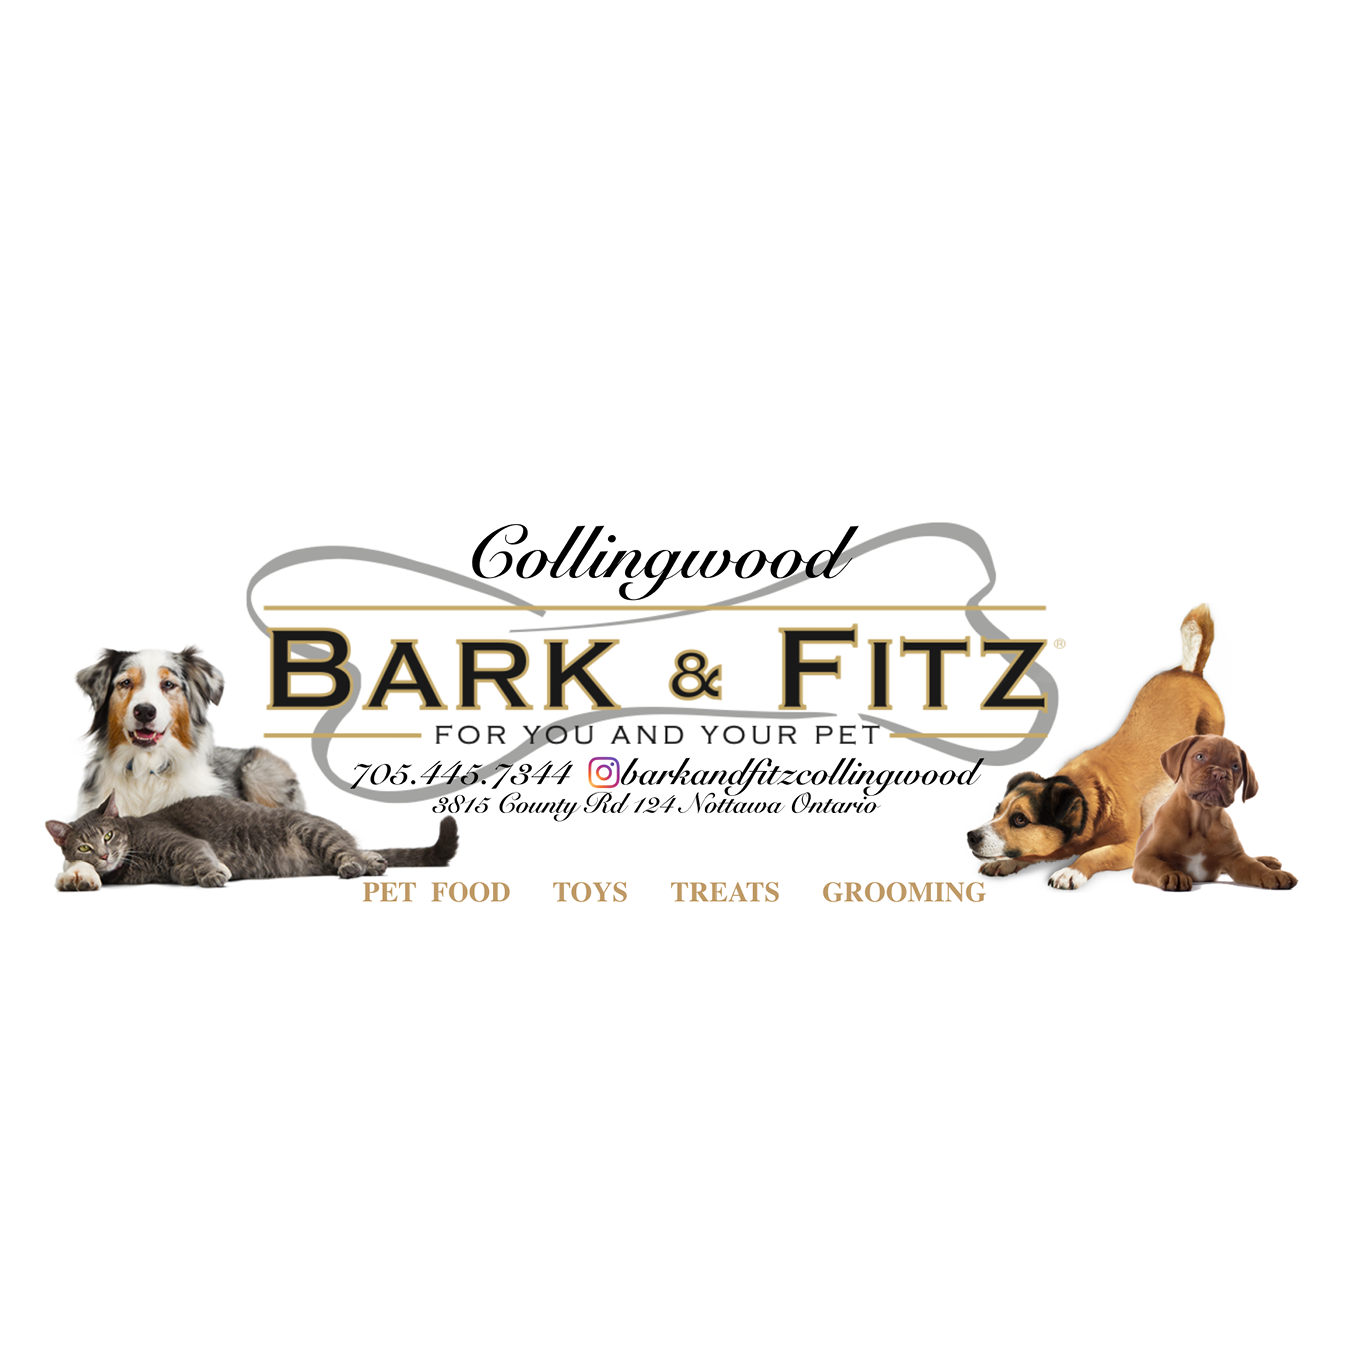 Greenhawk Bark & Fitz